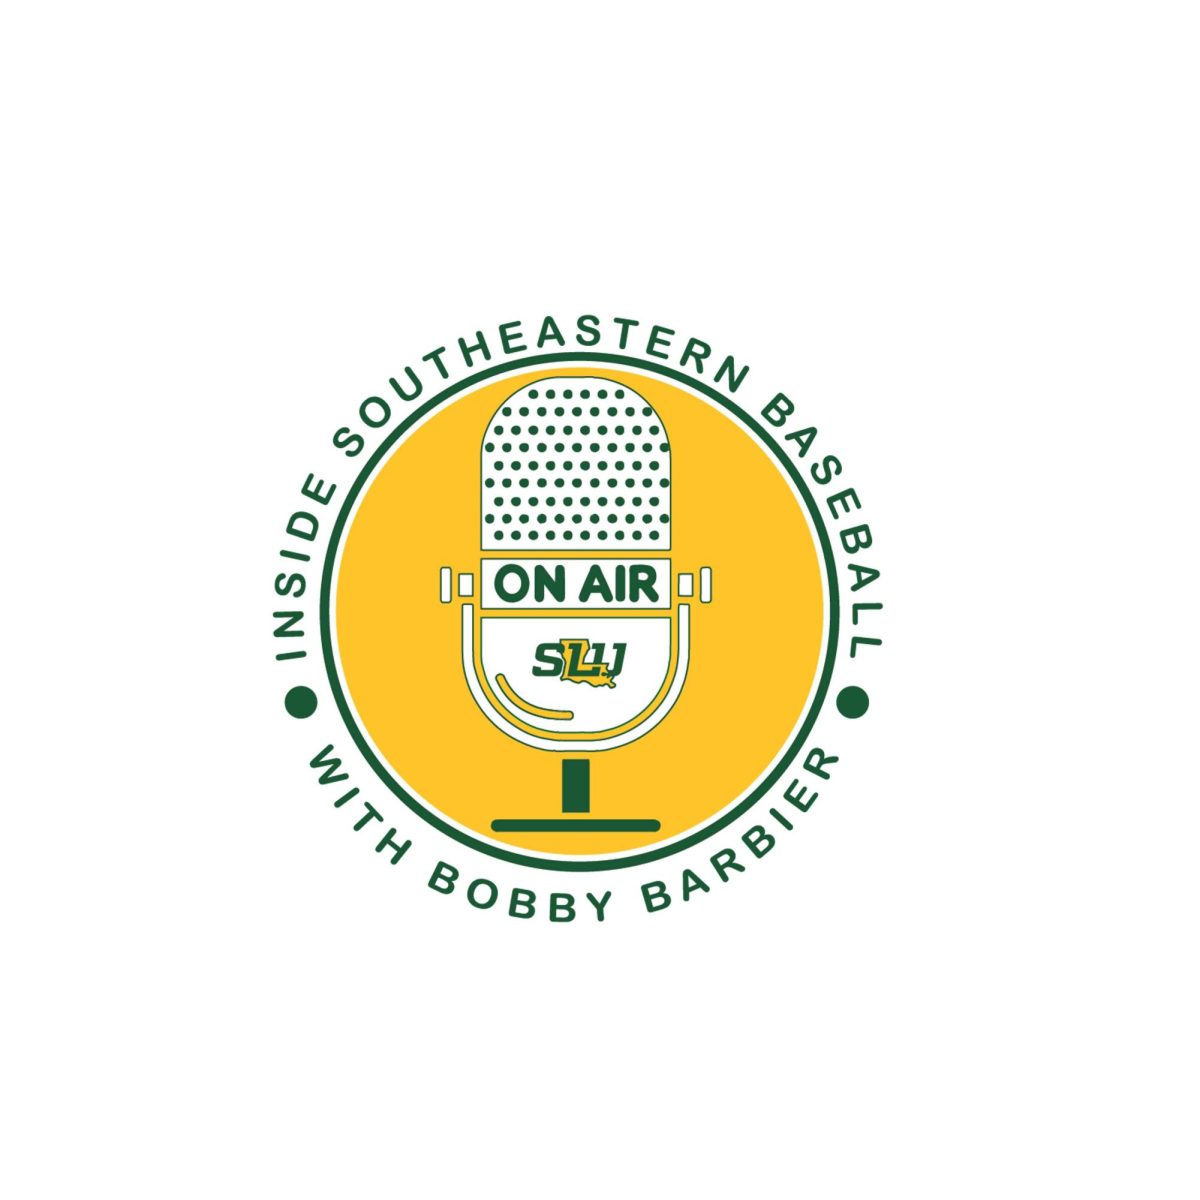 10: Inside Southeastern Baseball with Bobby Barbier - Episode 10